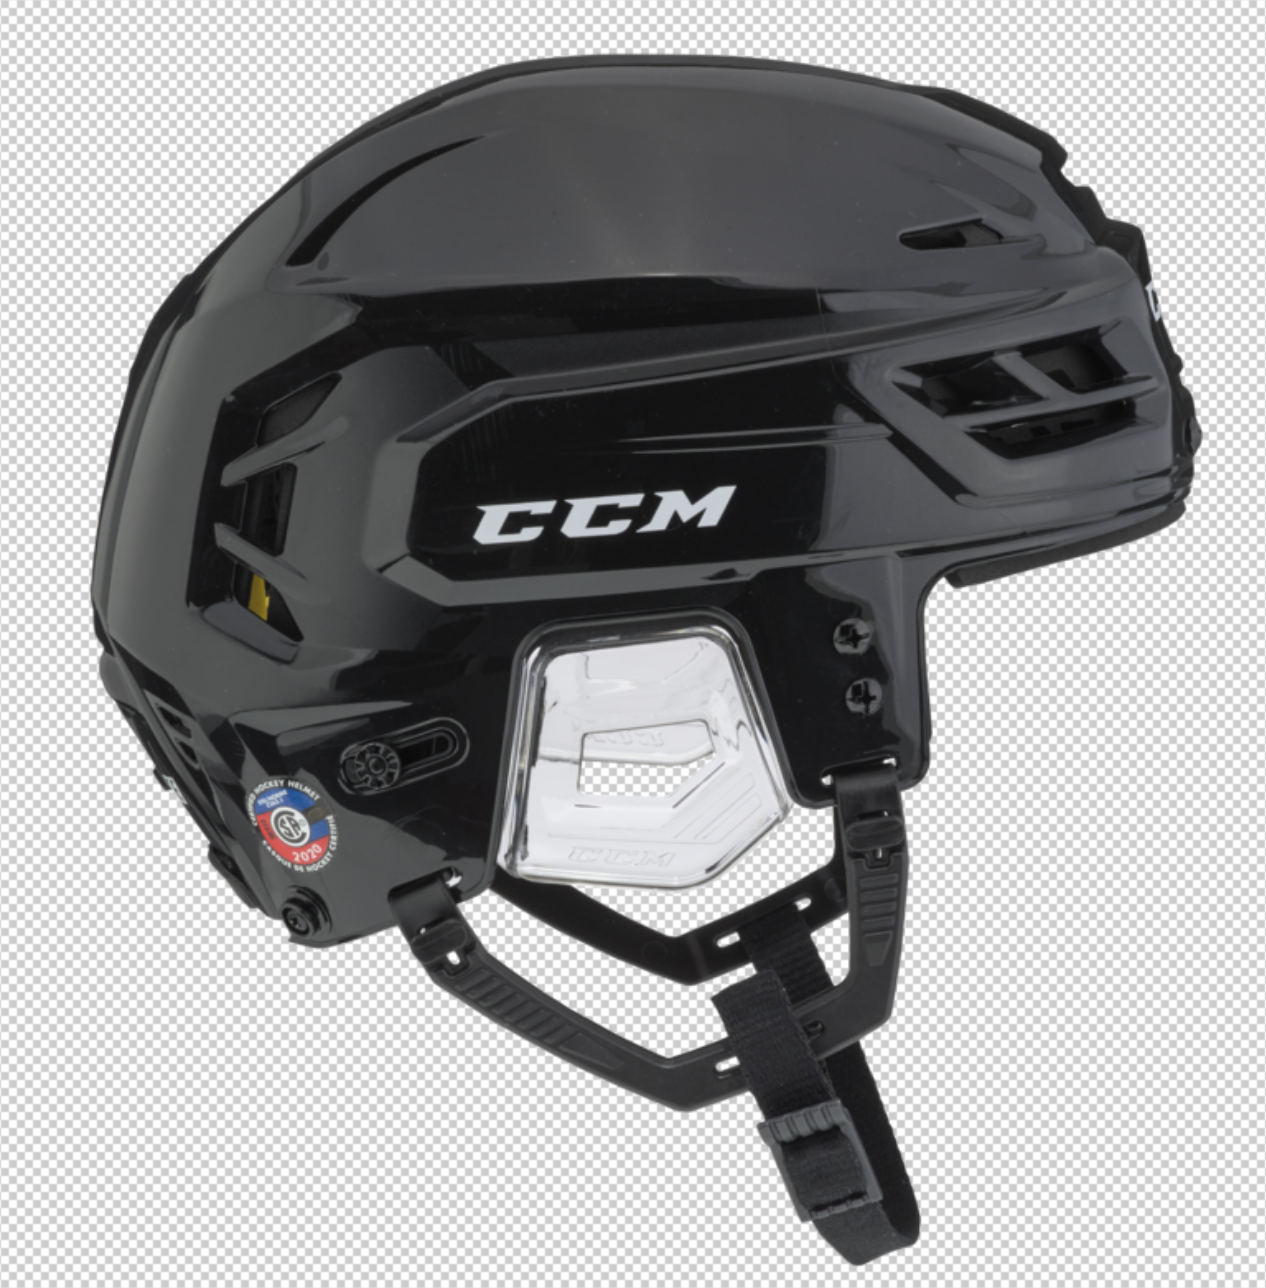 CCM Tacks 210 Ice Hockey Helmet